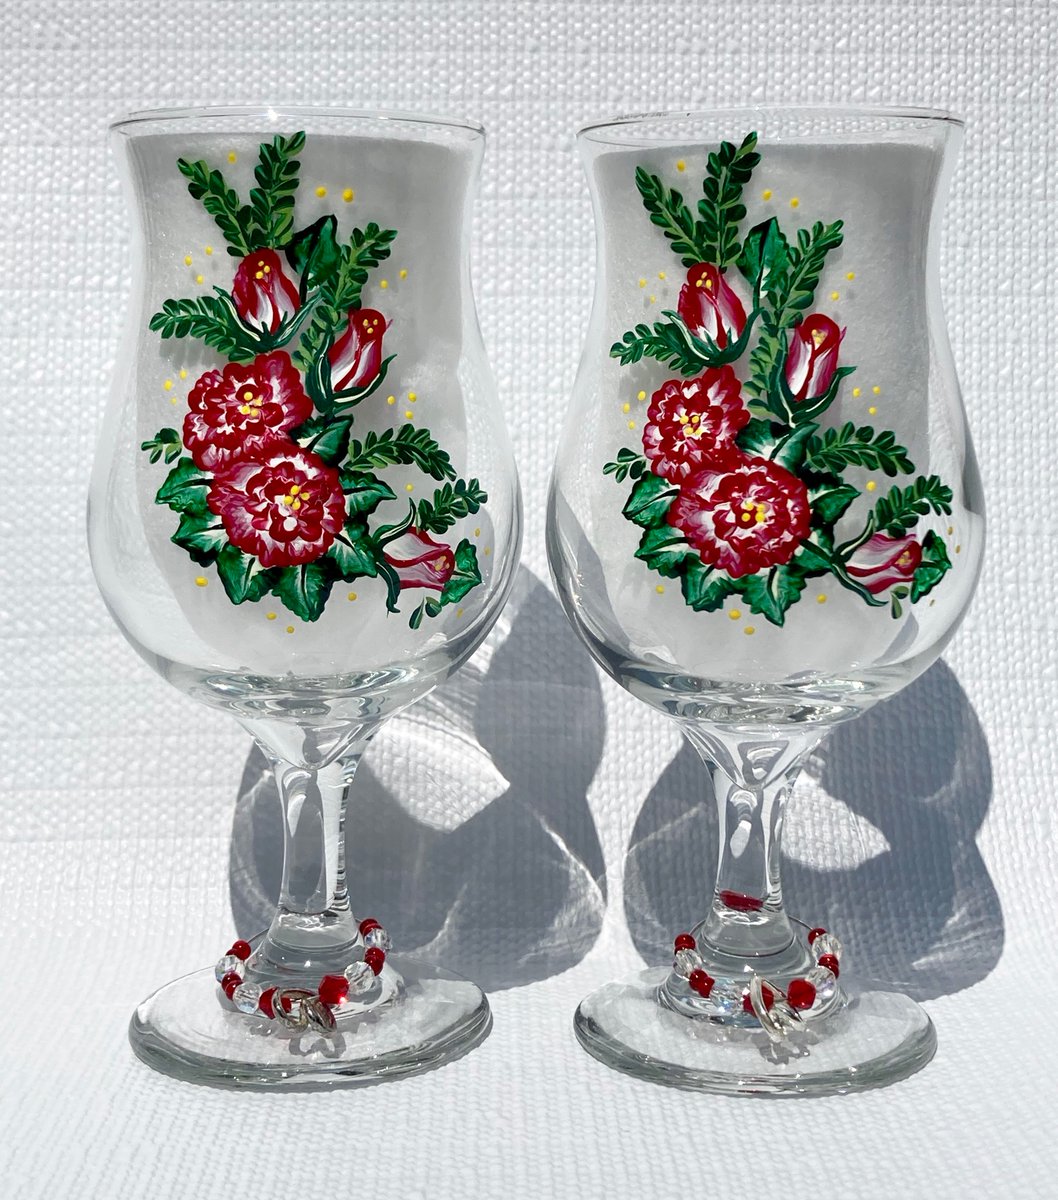 Check out these glasses etsy.com/listing/560241… #cocktailglasses #paintedglasses #uniquegifts #SMILEtt23 #etsy #etsystore #CraftBizParty